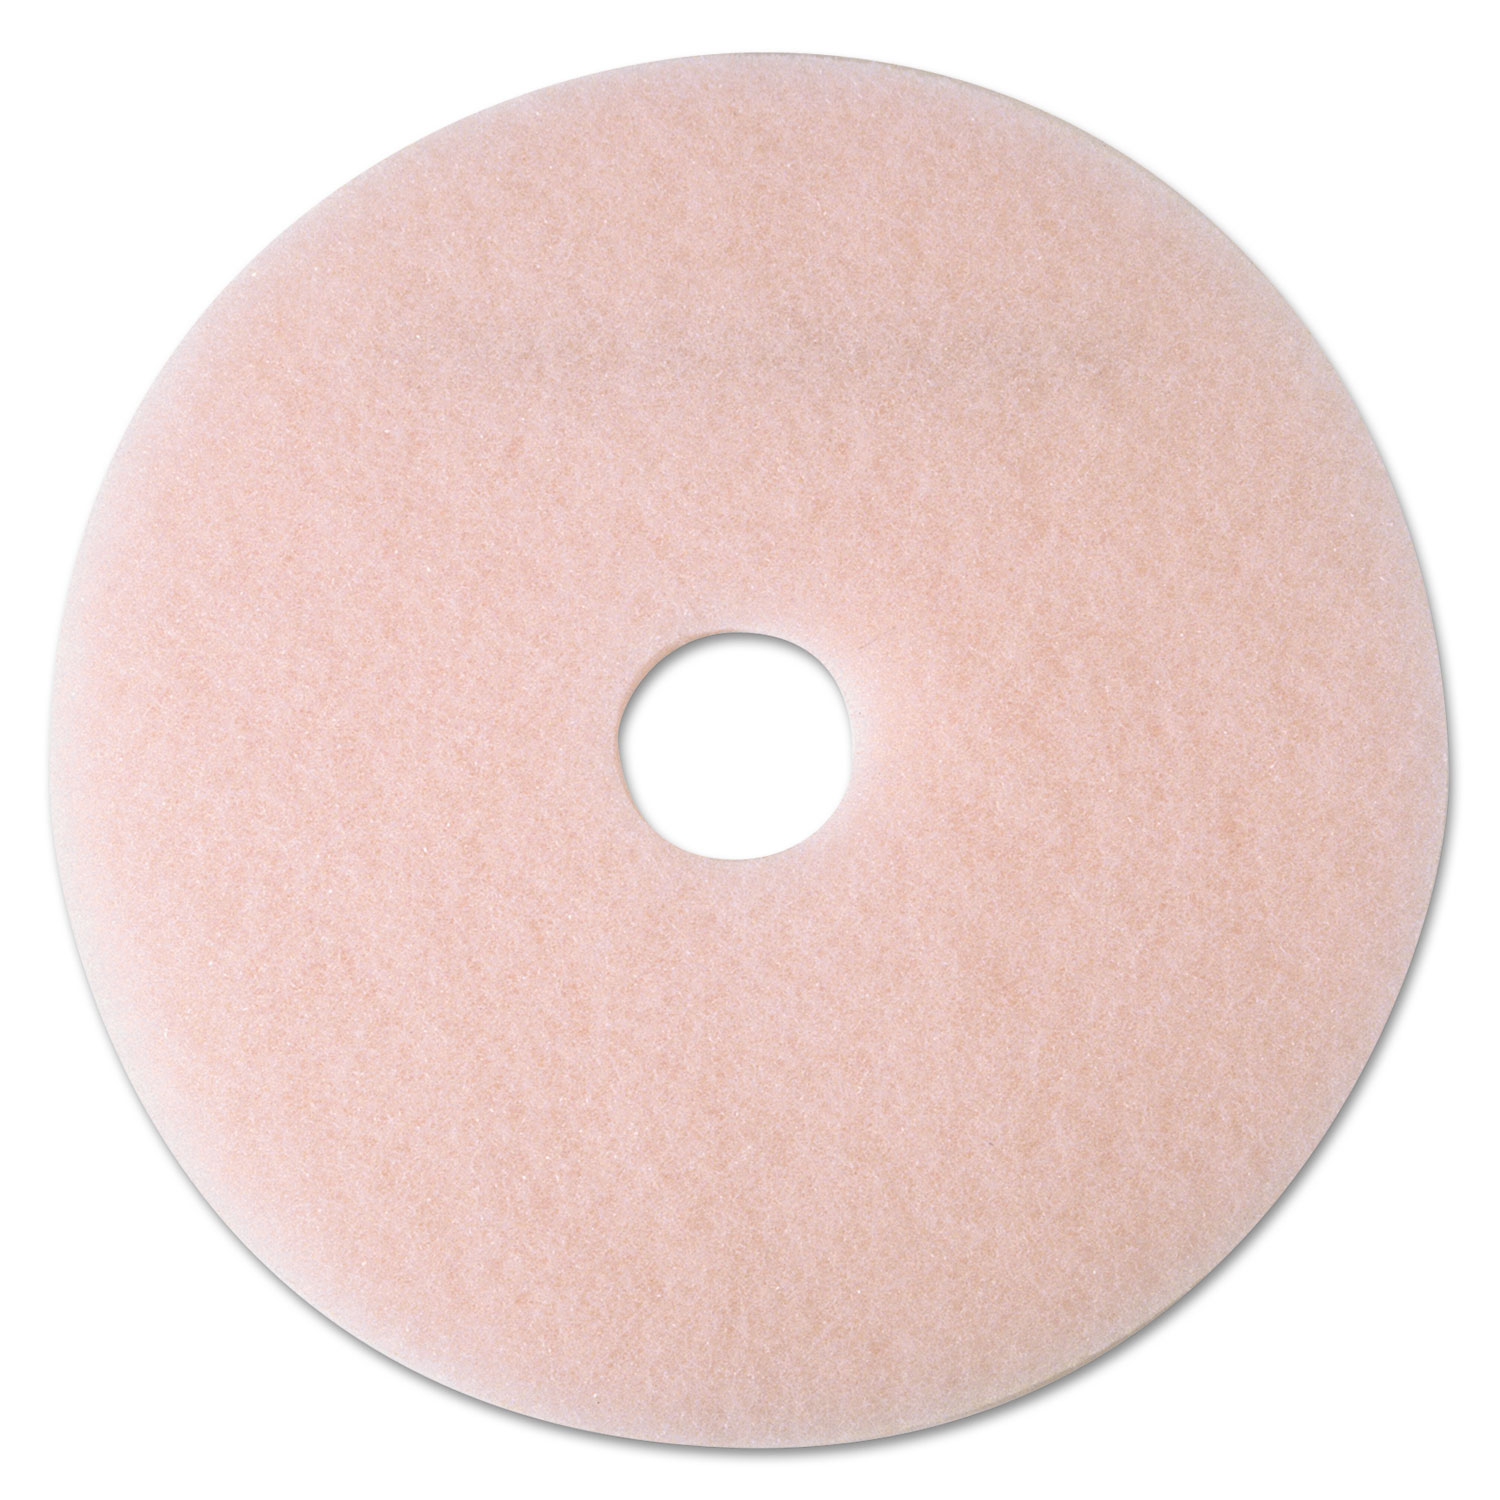  3M 3600 Ultra High-Speed Eraser Floor Burnishing Pad 3600, 21 Diameter, Pink, 5/Carton (MMM25859) 